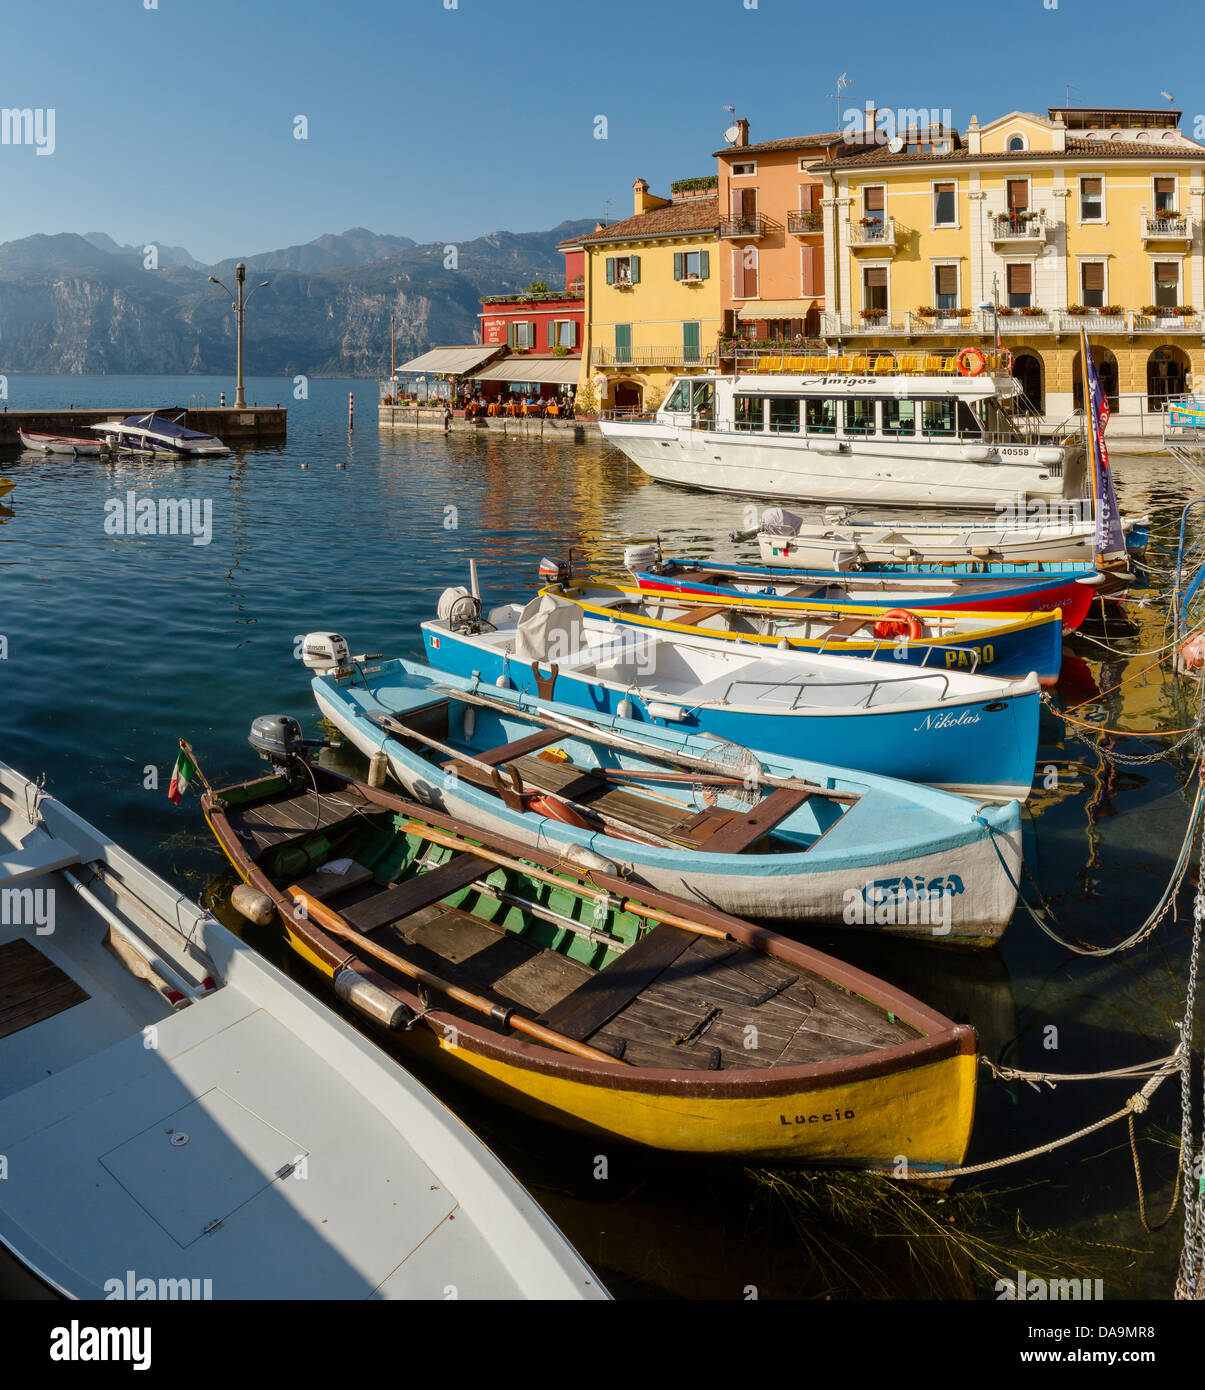 Italy, Europe, Lago di Garda, Verona, Malcesine, Port, city, village, water, autumn, mountains, lake, ships, boat, Stock Photo